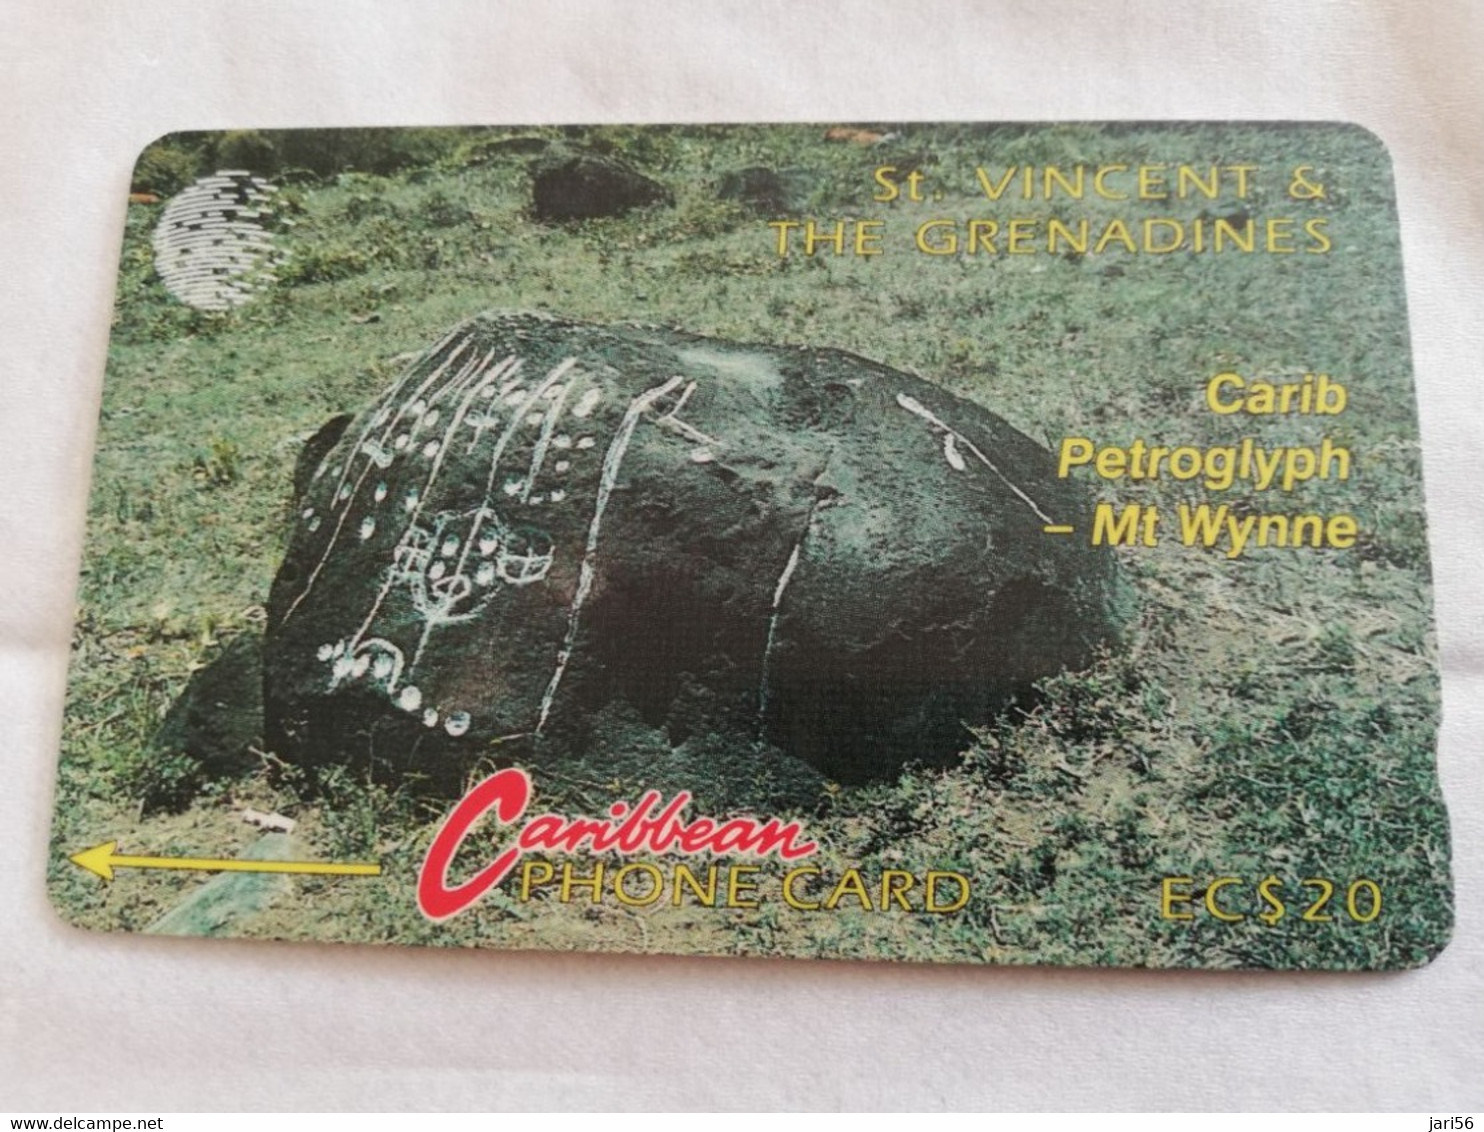 ST VINCENT & GRENADINES  GPT CARD   $ 20,-  5CSVB  CARIB PETROGLYPH     C&W    Fine Used  Card  **5644 ** - St. Vincent & Die Grenadinen